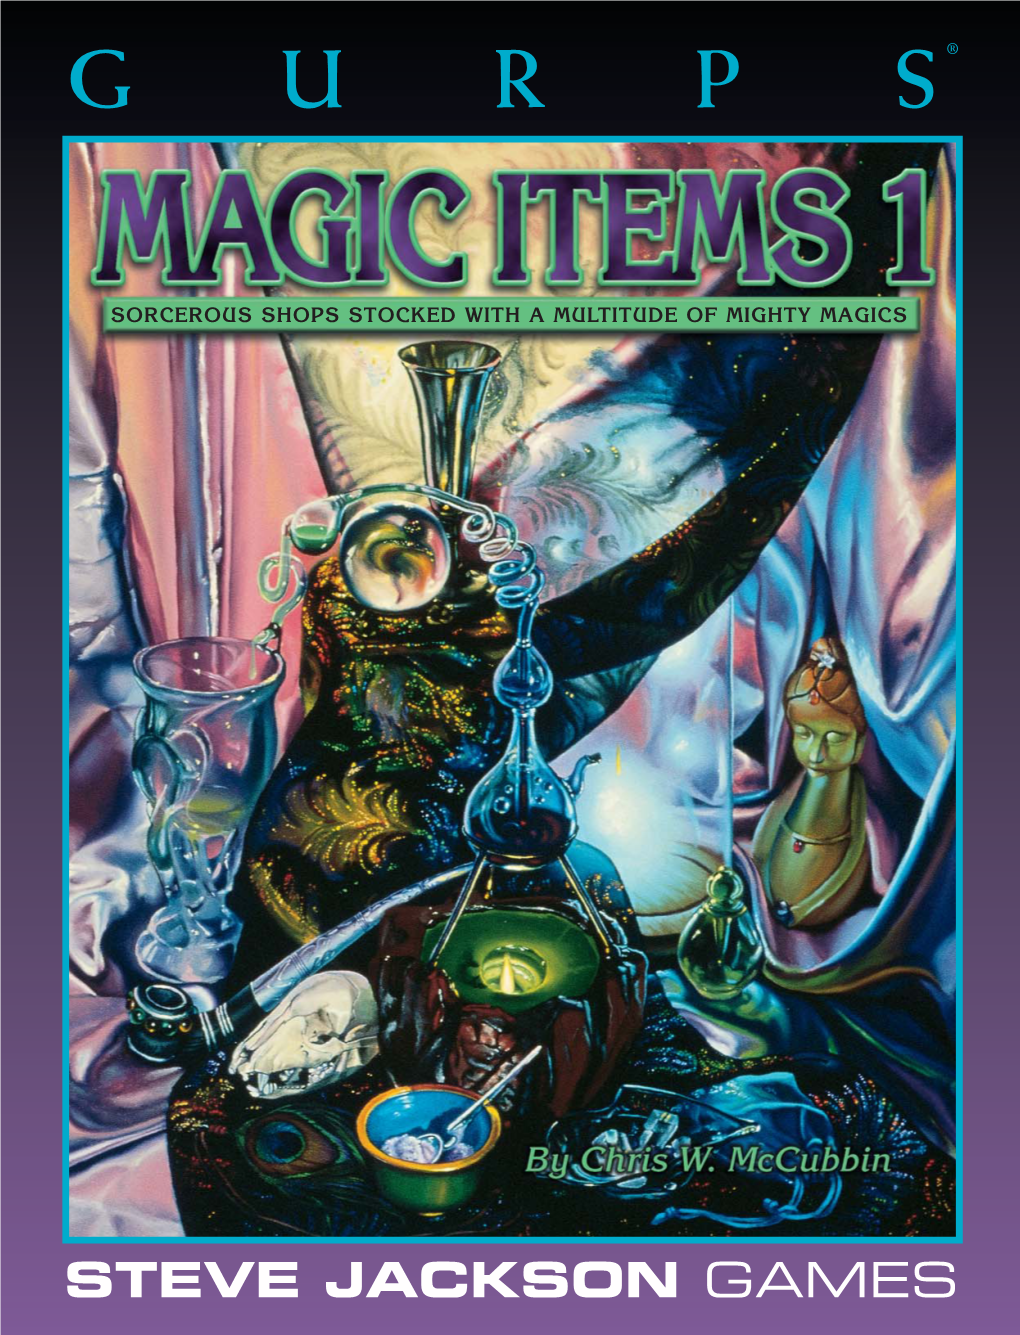 GURPS Classic Magic Items 1